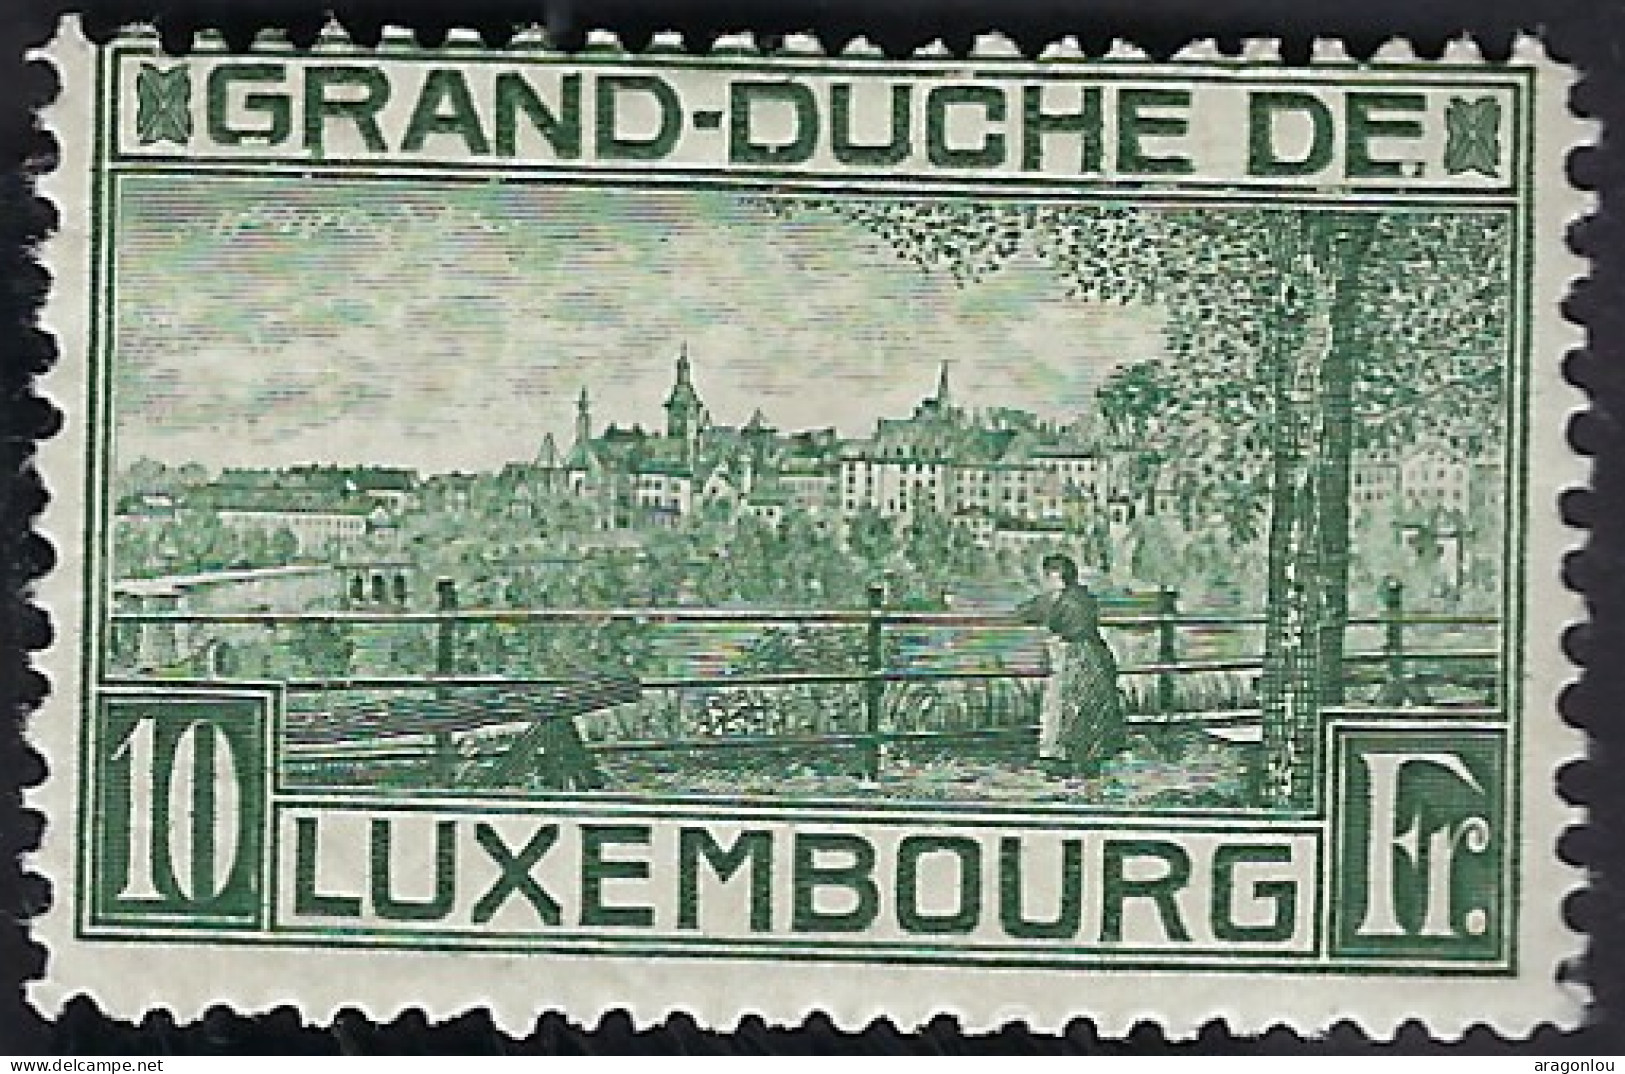 Luxembourg - Luxemburg - Timbre   1923   Naissance  Princesse Elisabeth   Michel 142   *   VC. 600,- Très Rare - Usados